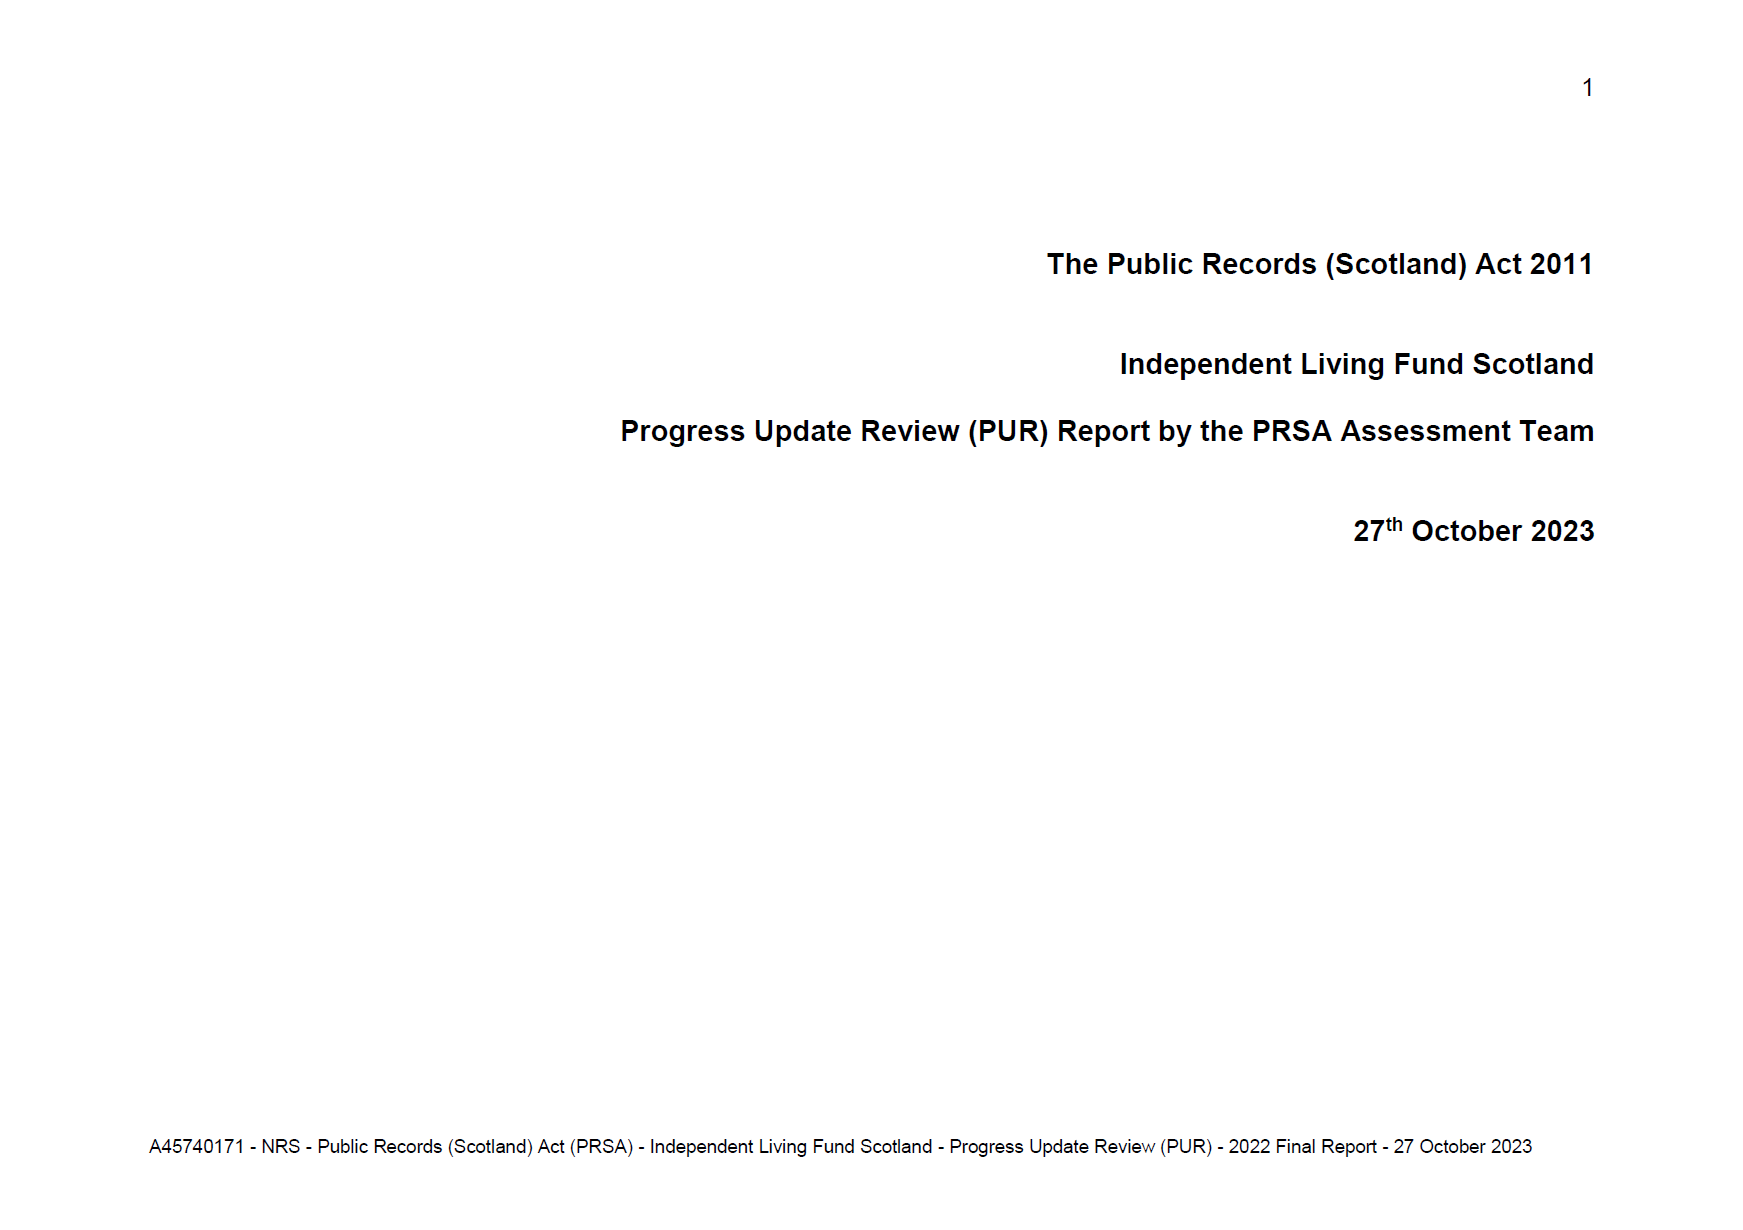 The cover of the Public Records Scotland ILF Progress Update Review